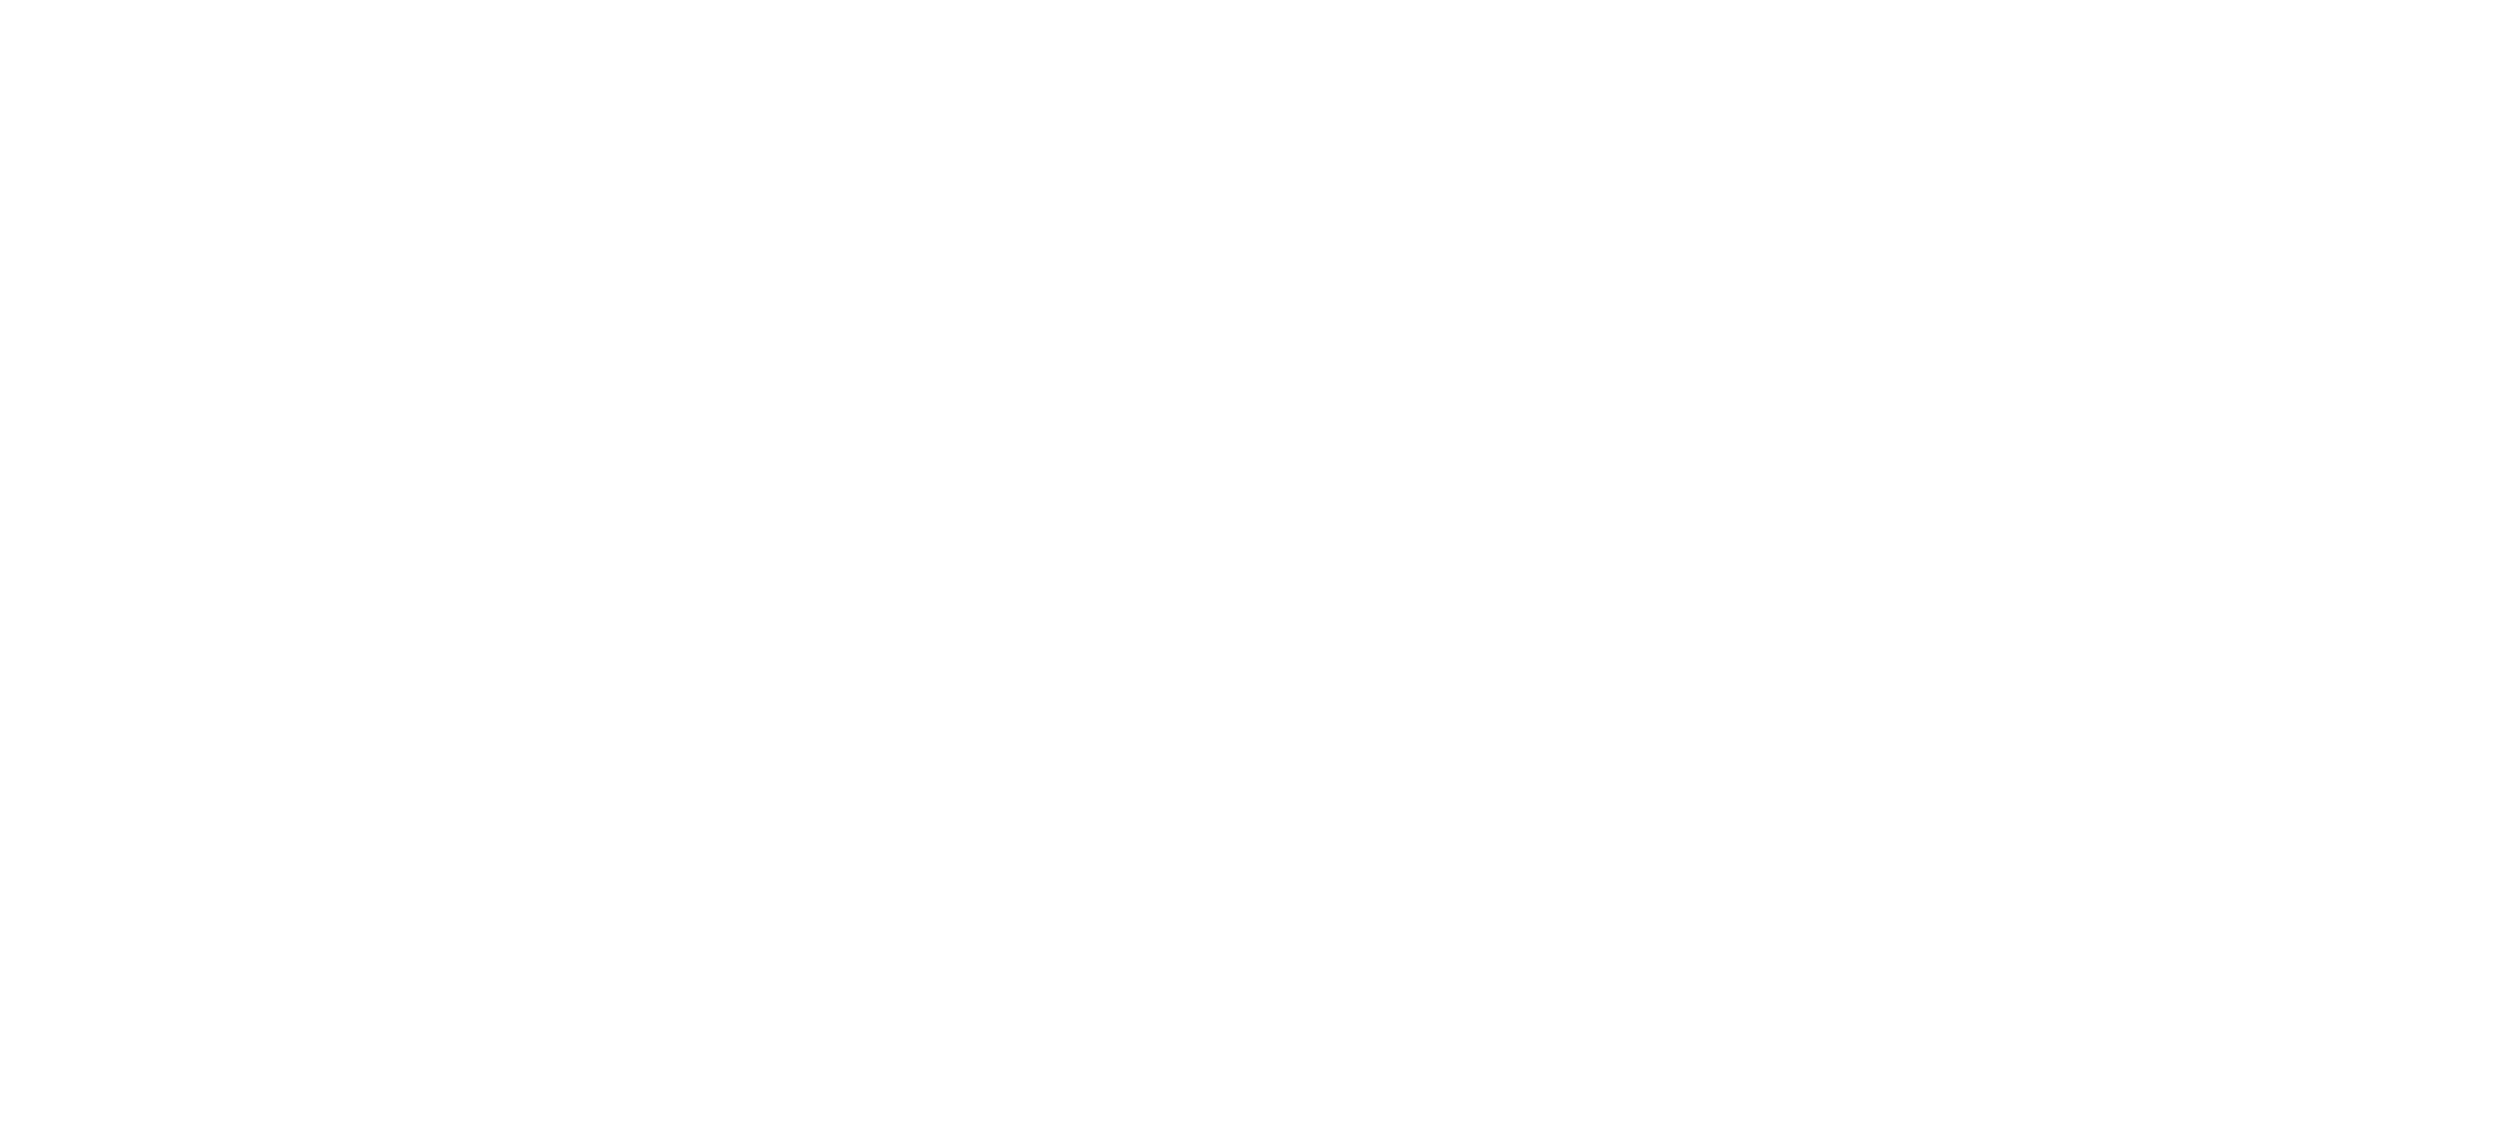 srh spade logo wallpaper